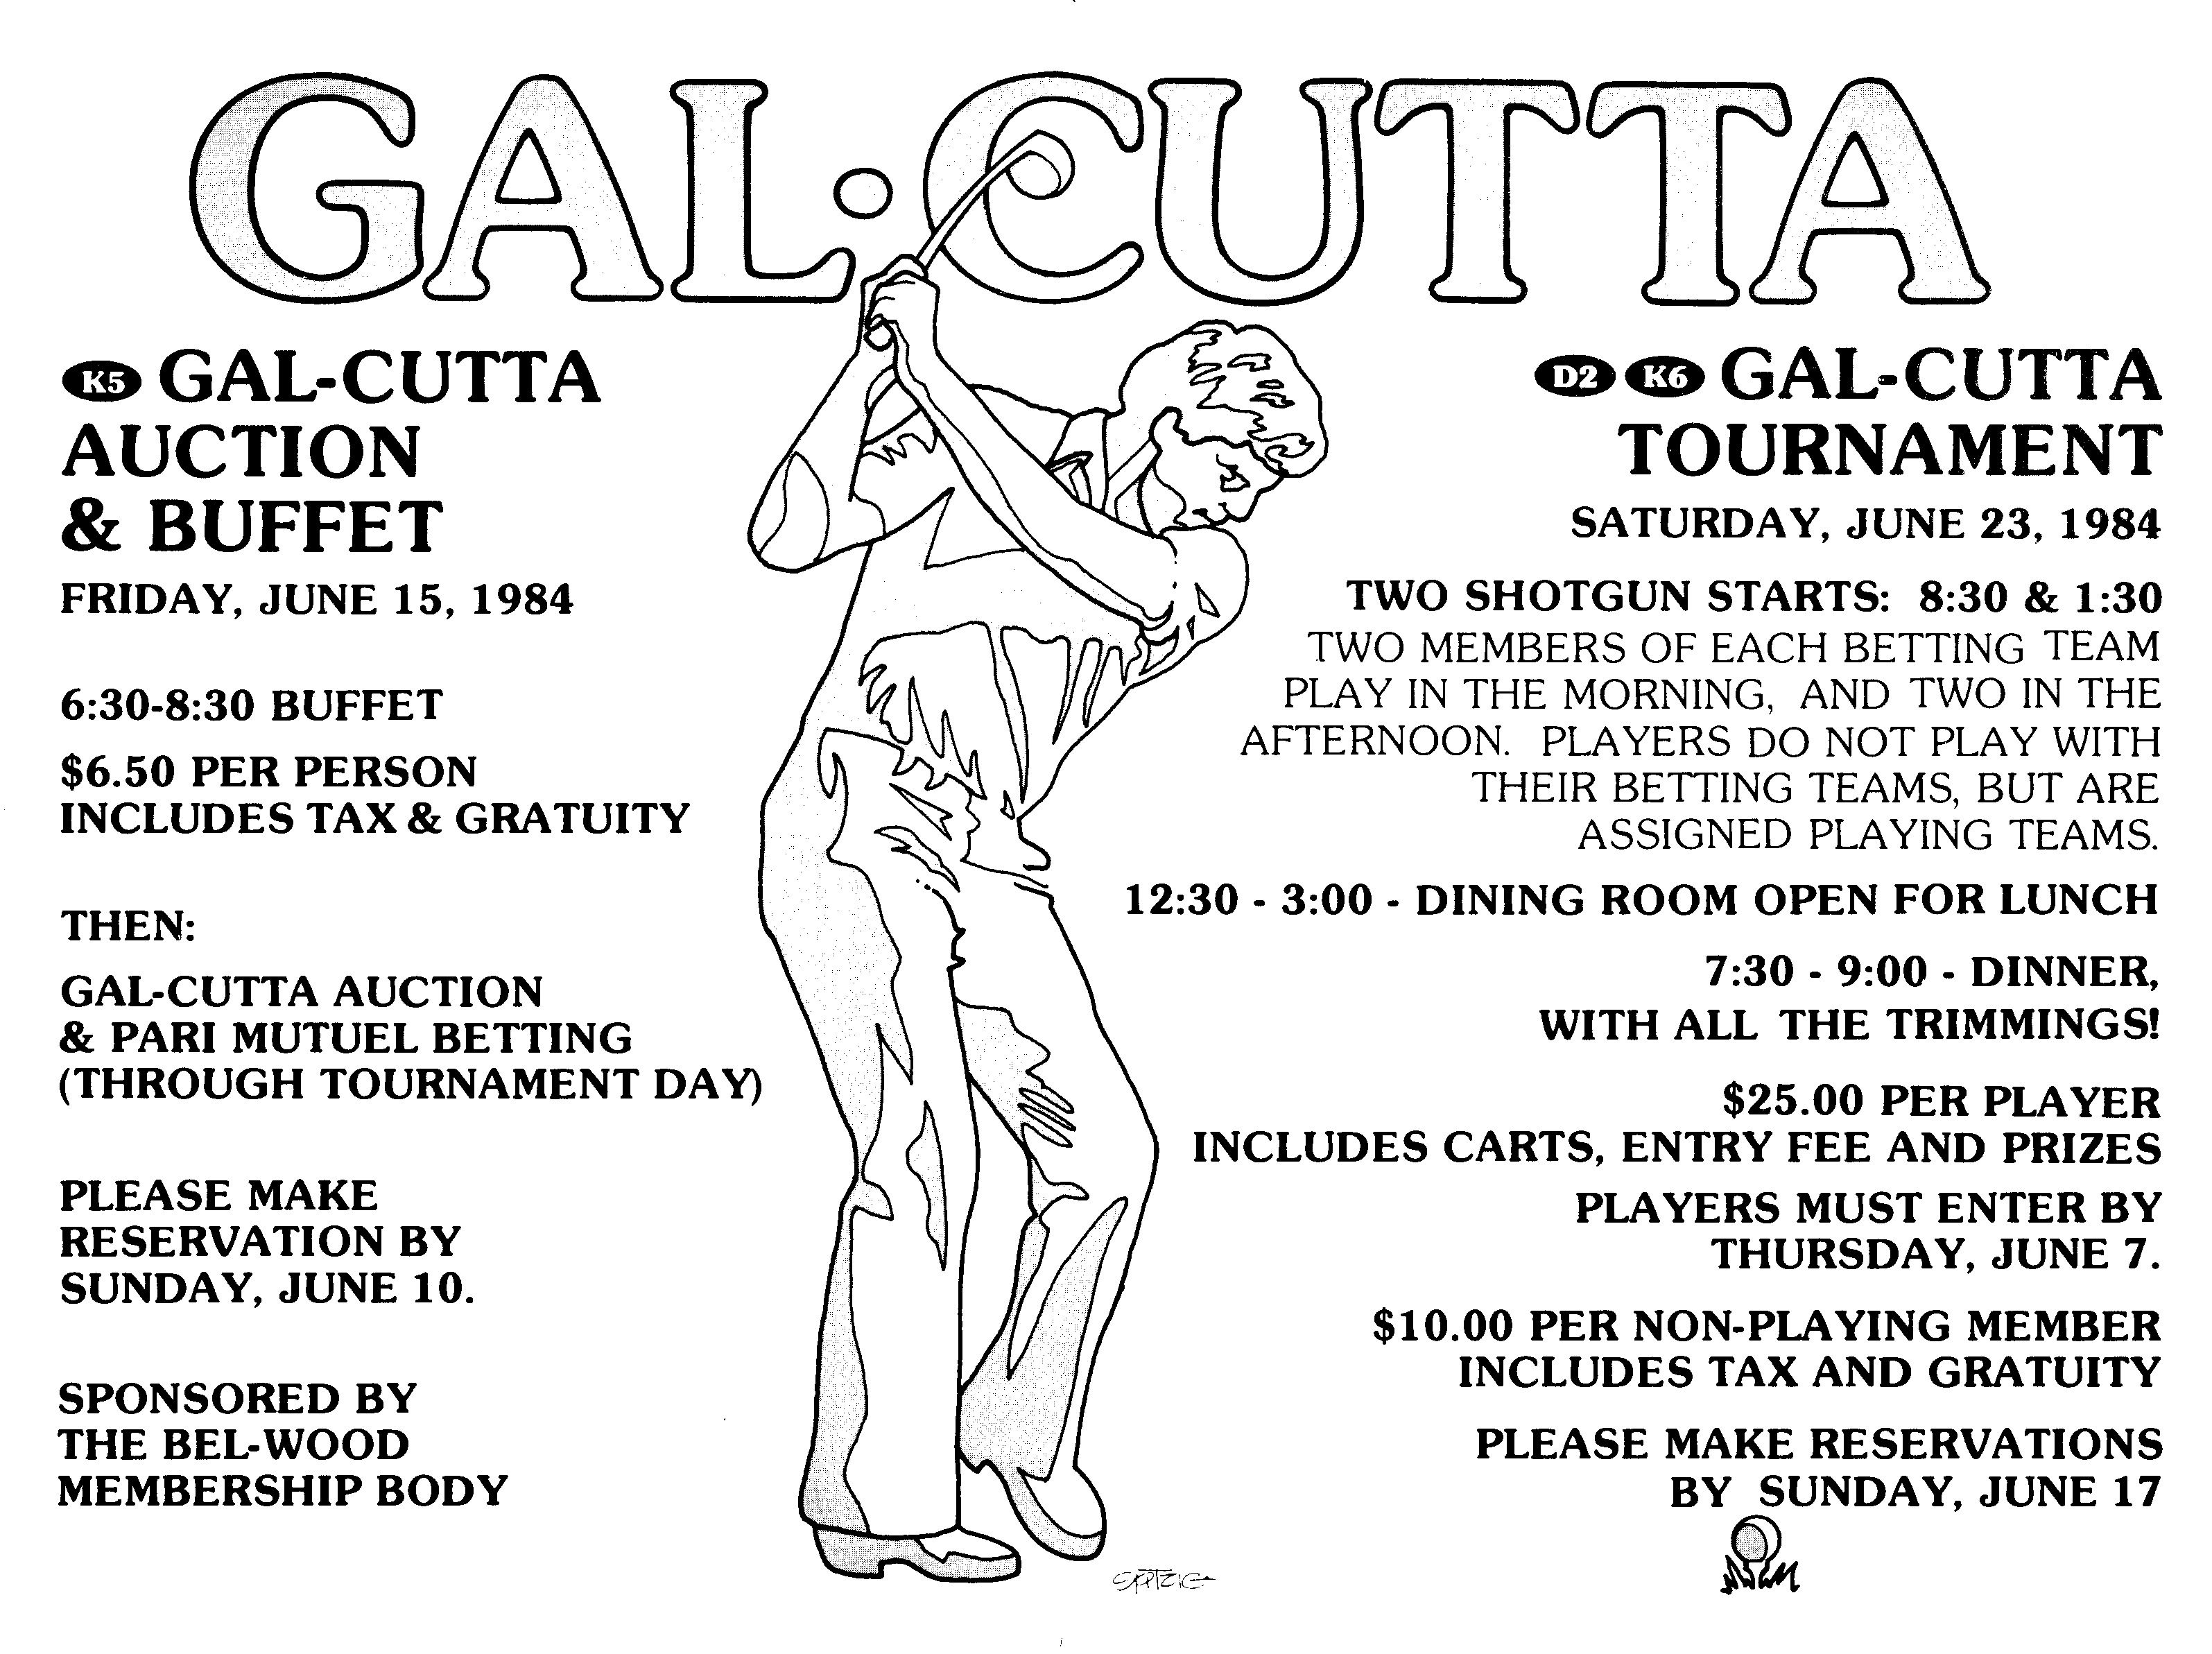 A flier for a Gal-Cutta golf event at a country club.